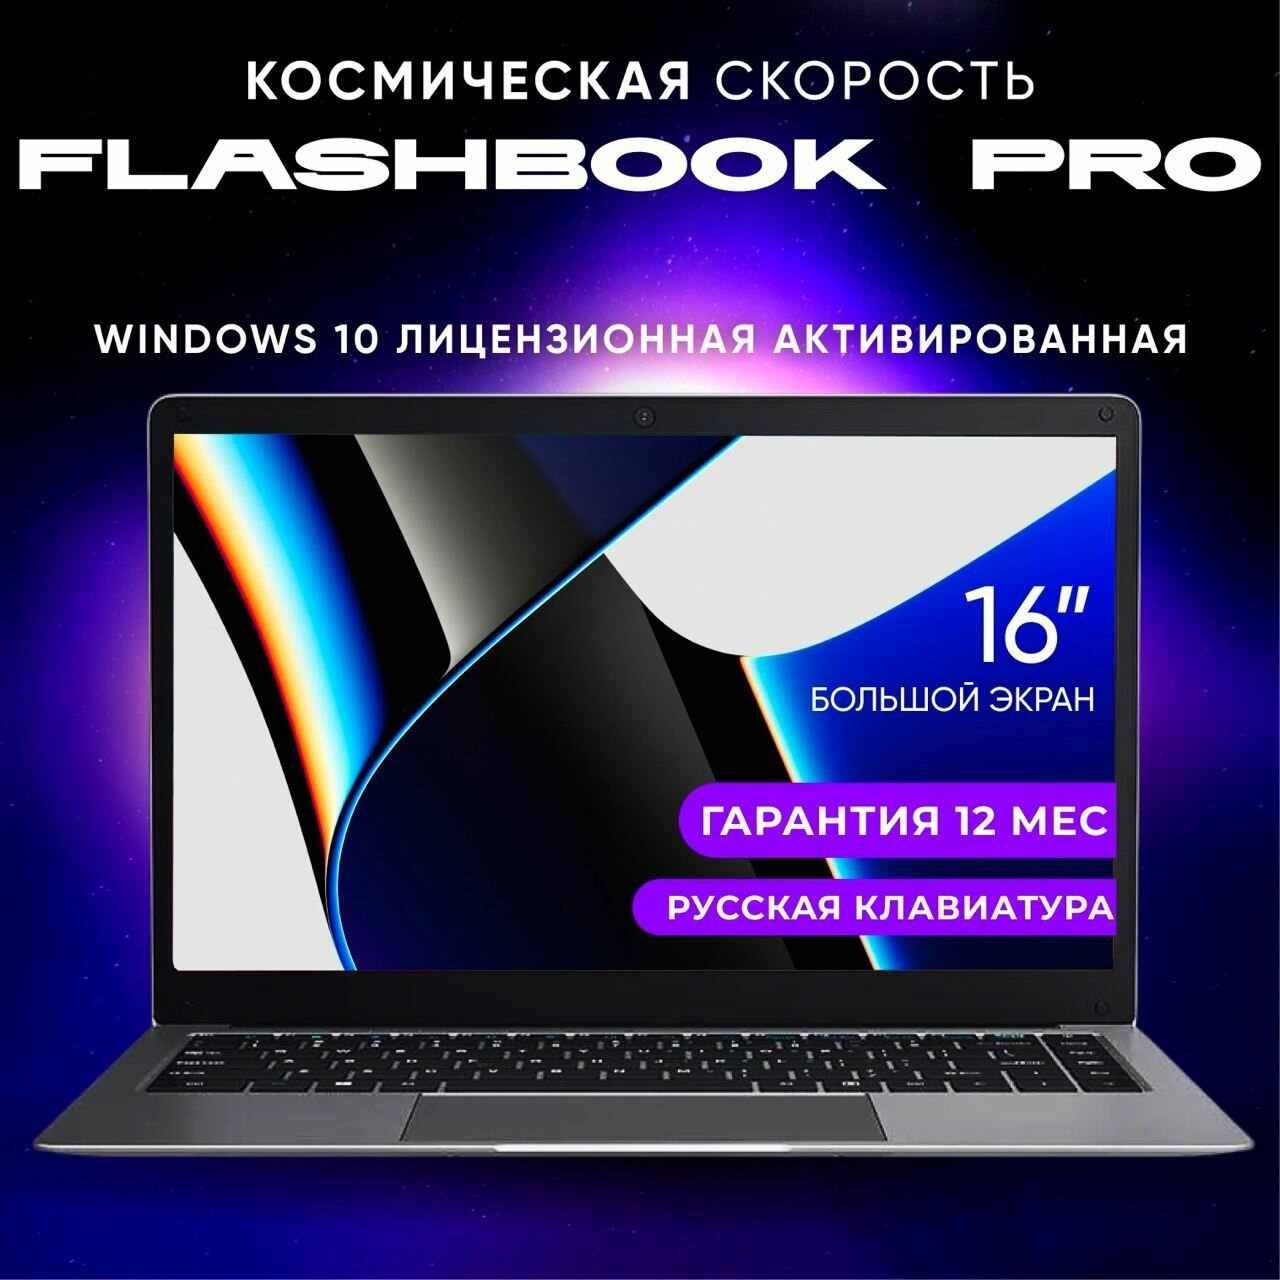 Flashbook Pro 16